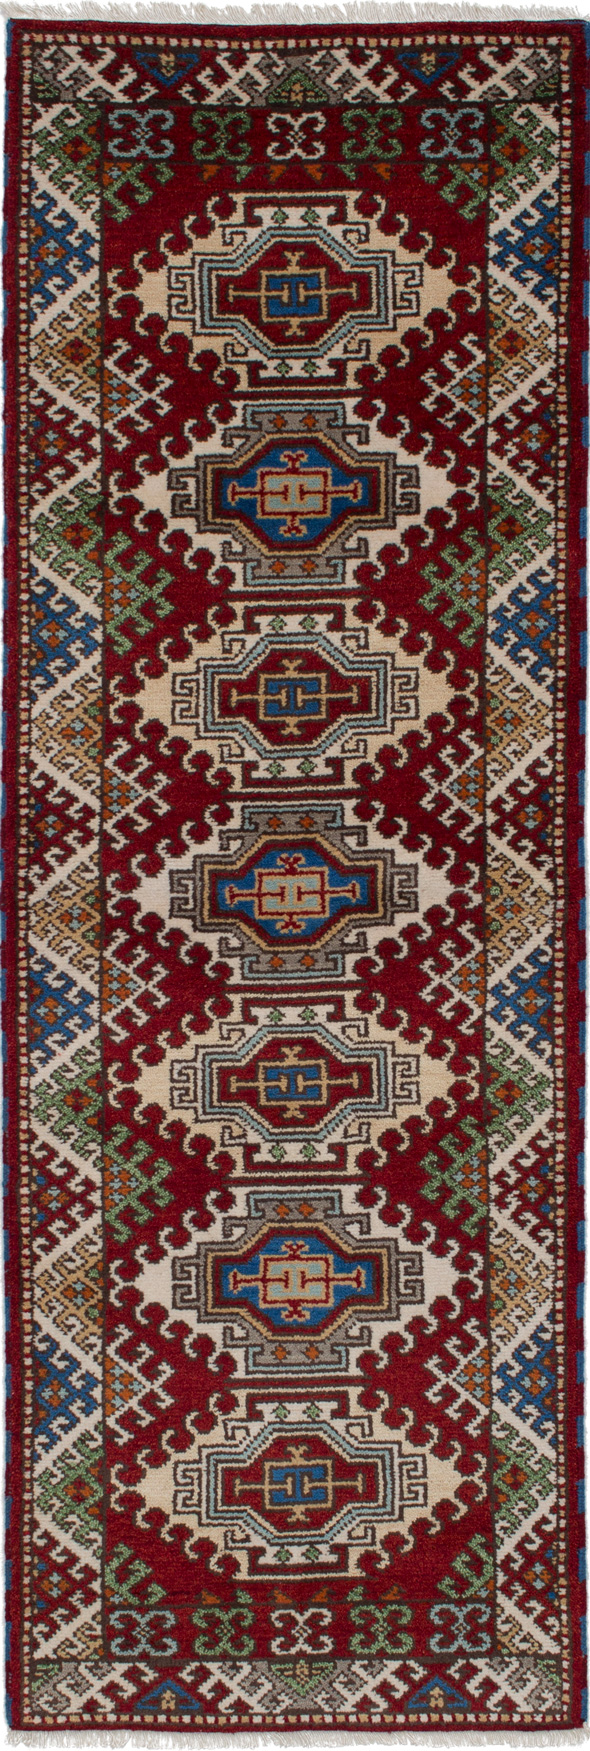 Hand-knotted Royal Kazak Dark Red Wool Rug 2'9" x 8'2"  Size: 2'9" x 8'2"  